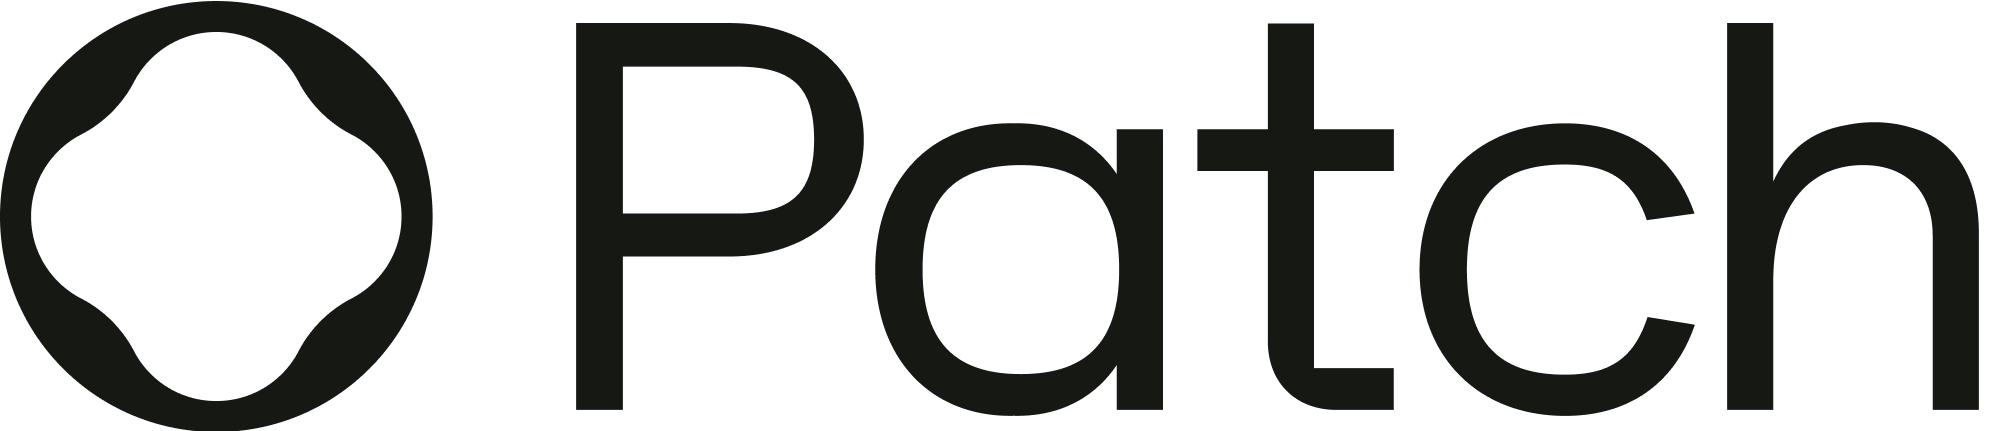 Patch Company Logo